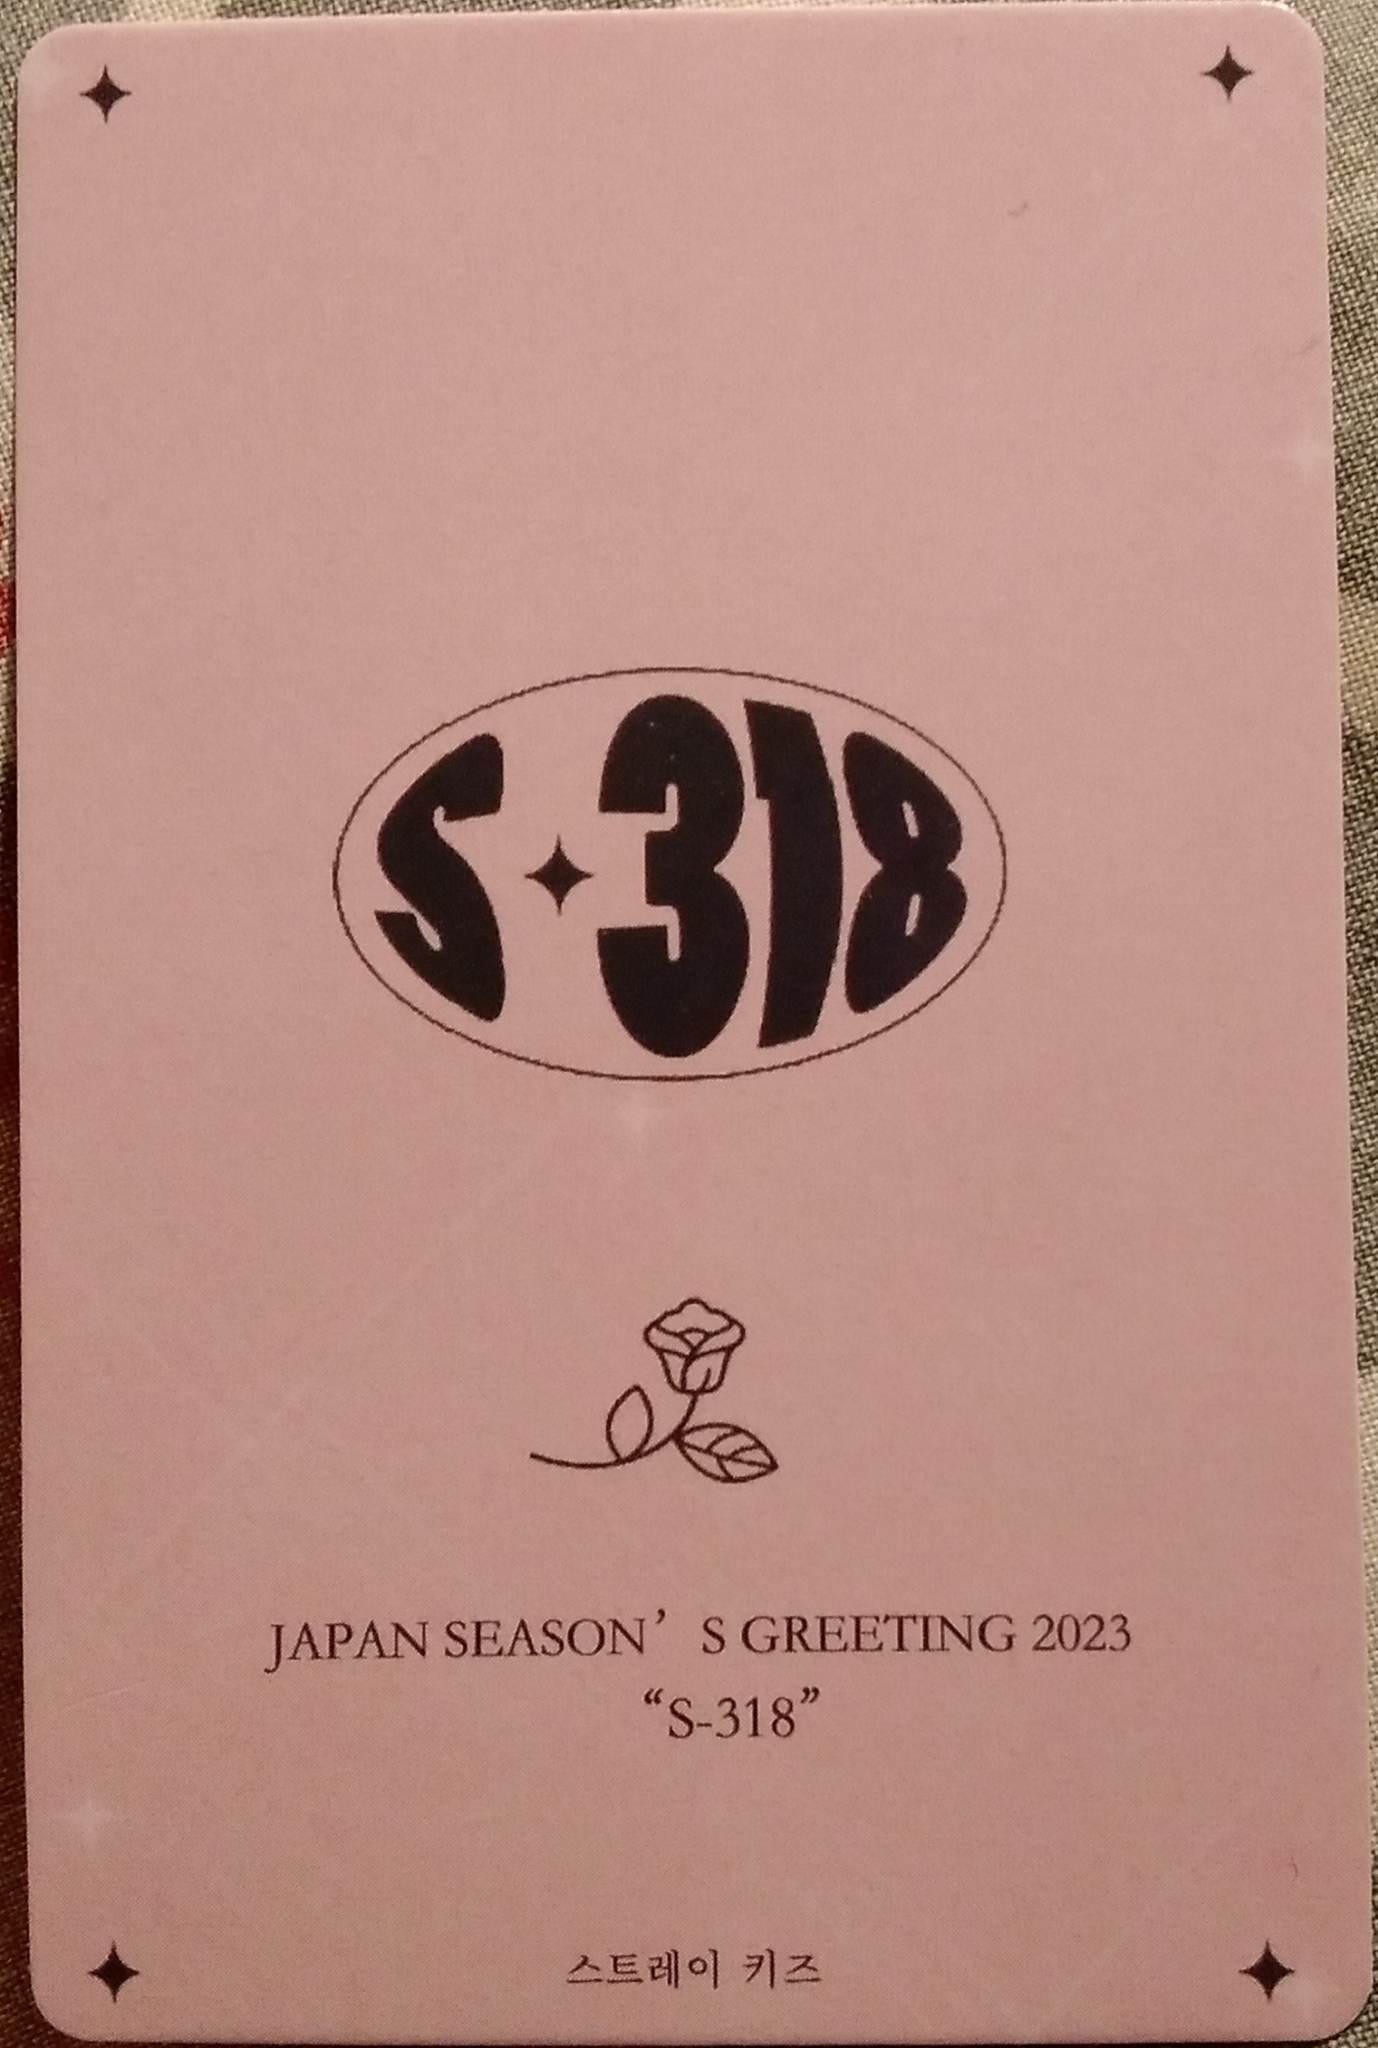 Photocard  STRAYKIDS  Japan season s greetings 2023  "S-318"  Han jisung  Changbin  Bang chan